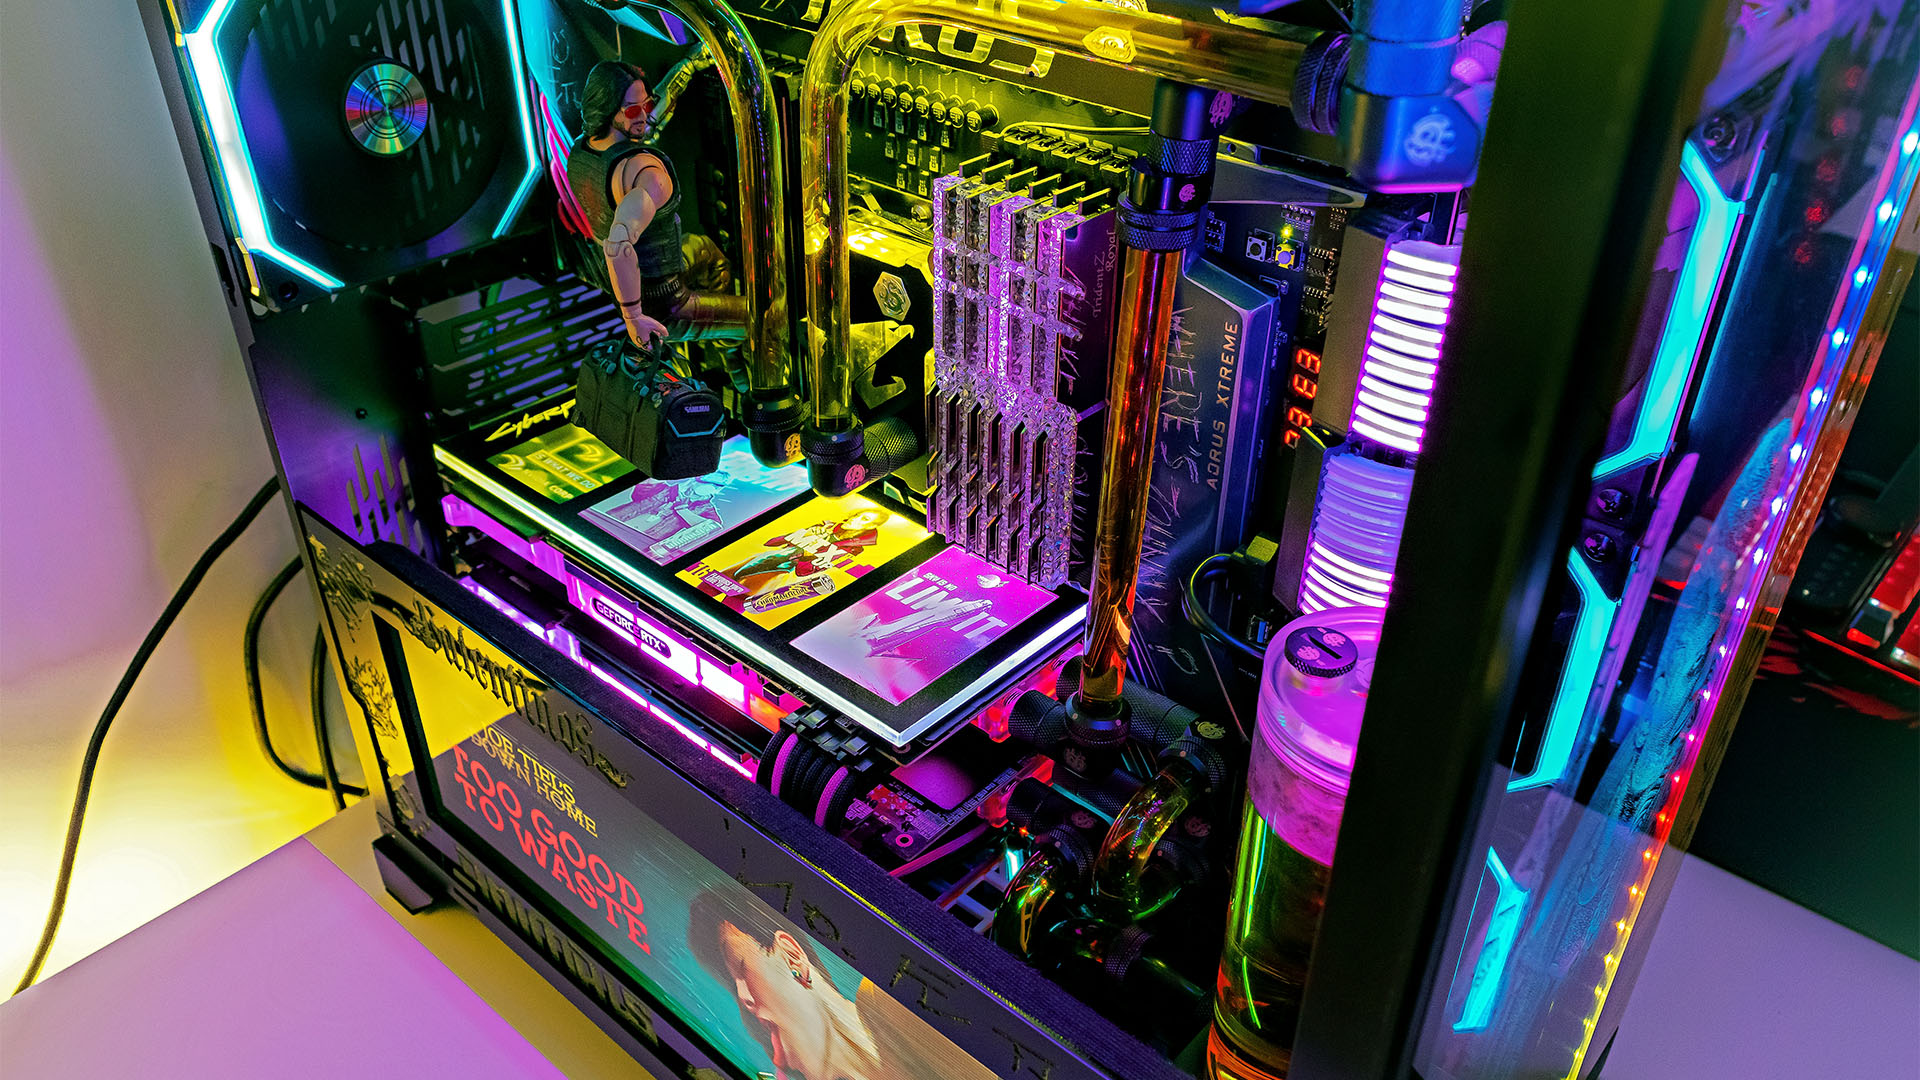 Inside a Cyberpunk 2077 custom PC build which has a bespoke GPU backplate, lots of neon lights, and an interactive PSU shroud